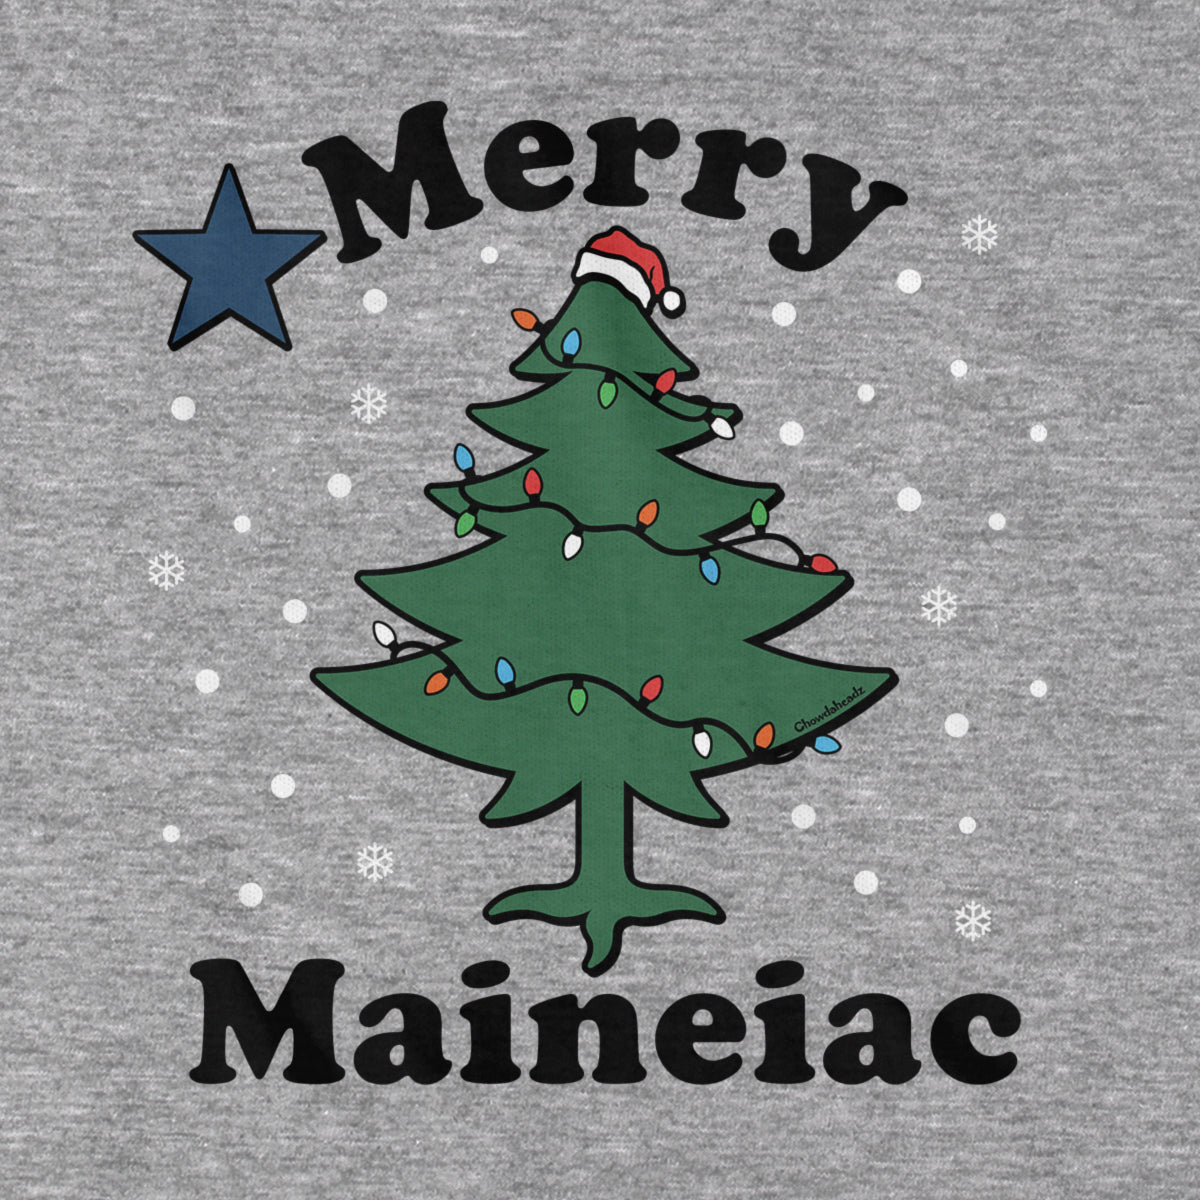 Merry Maineiac Christmas Tree - Chowdaheadz